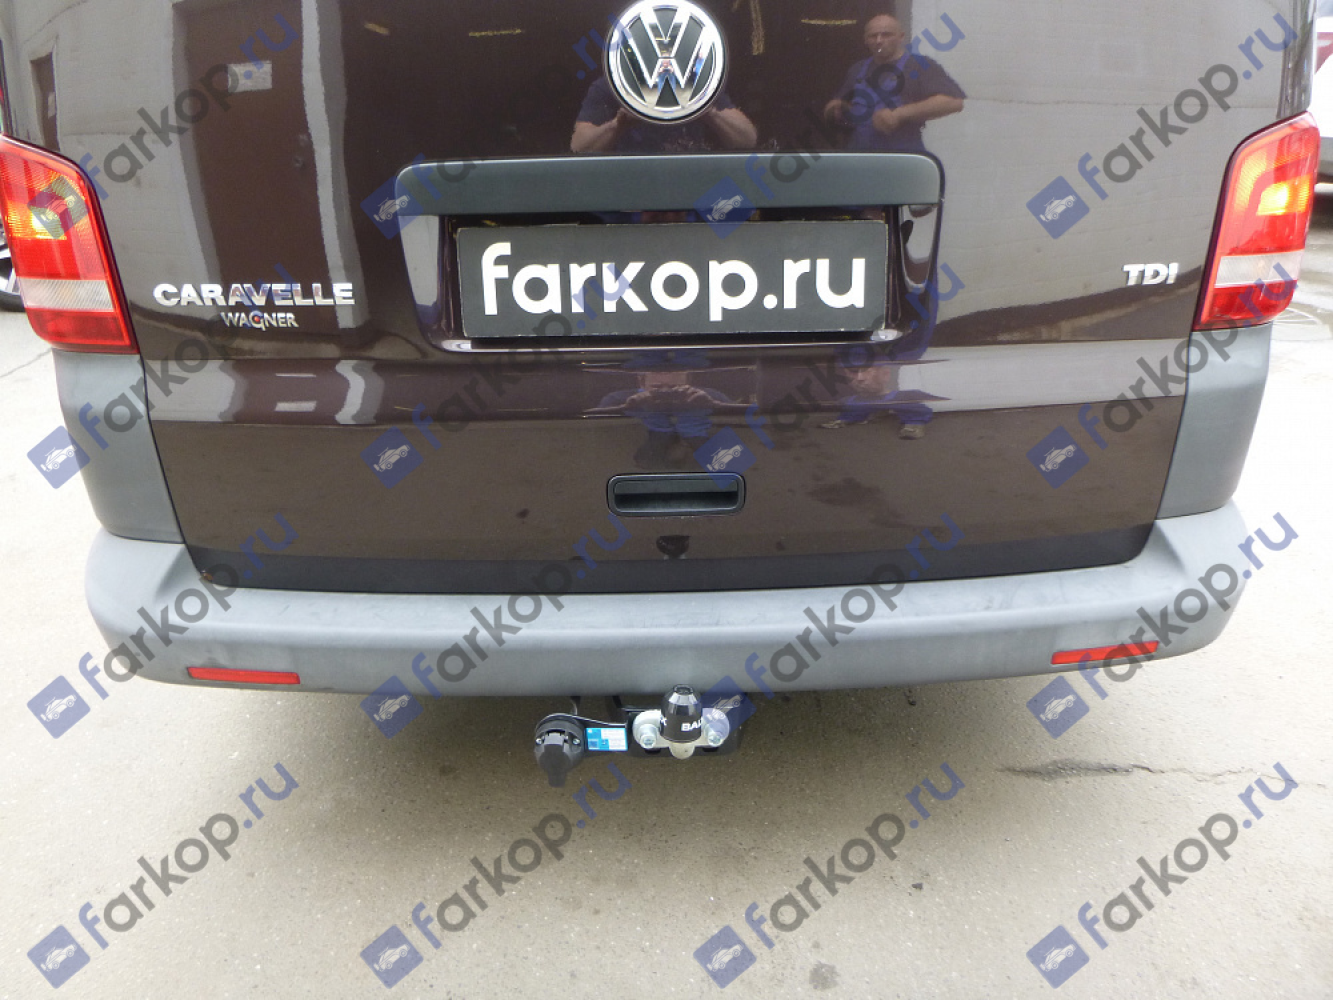 Фаркоп Baltex для Volkswagen Caravelle T6 2015- 26199122 в 